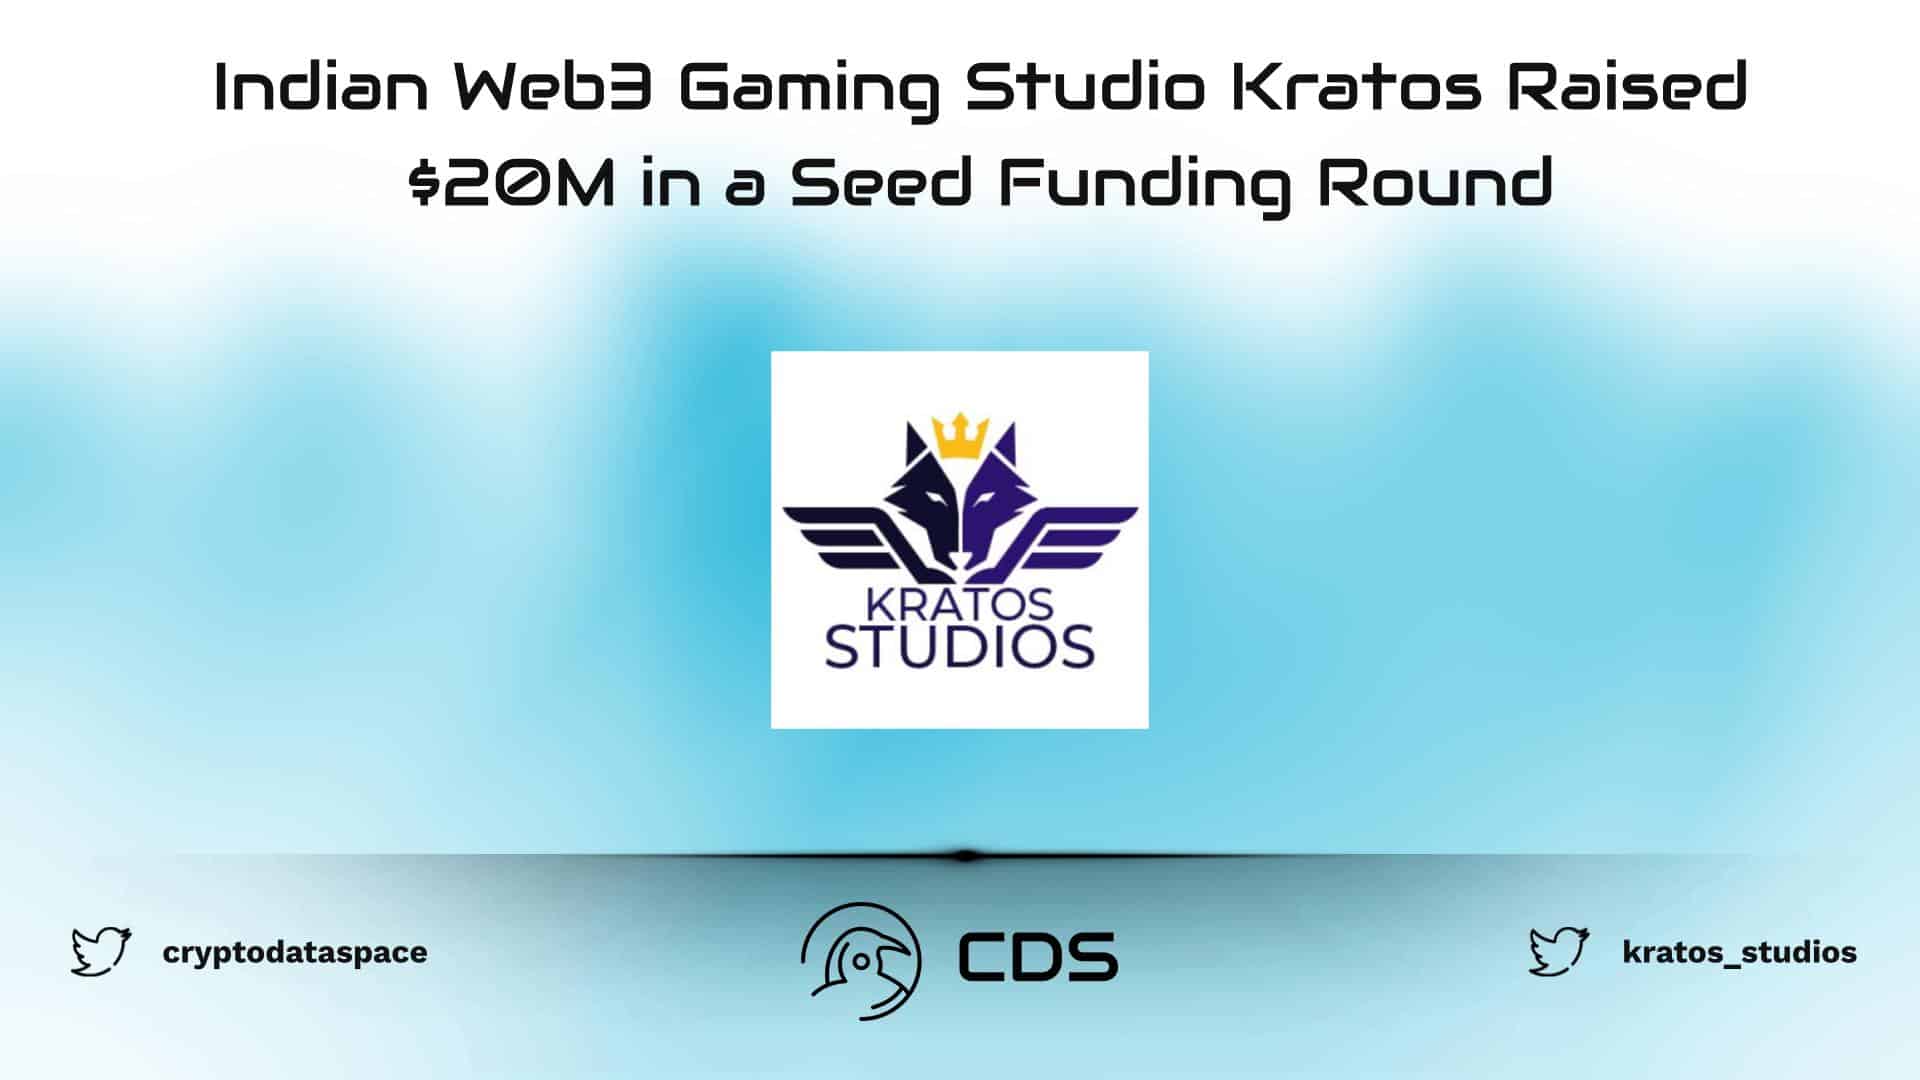 Indian Web3 Gaming Studio Kratos Raised $20M in a Seed Funding Round